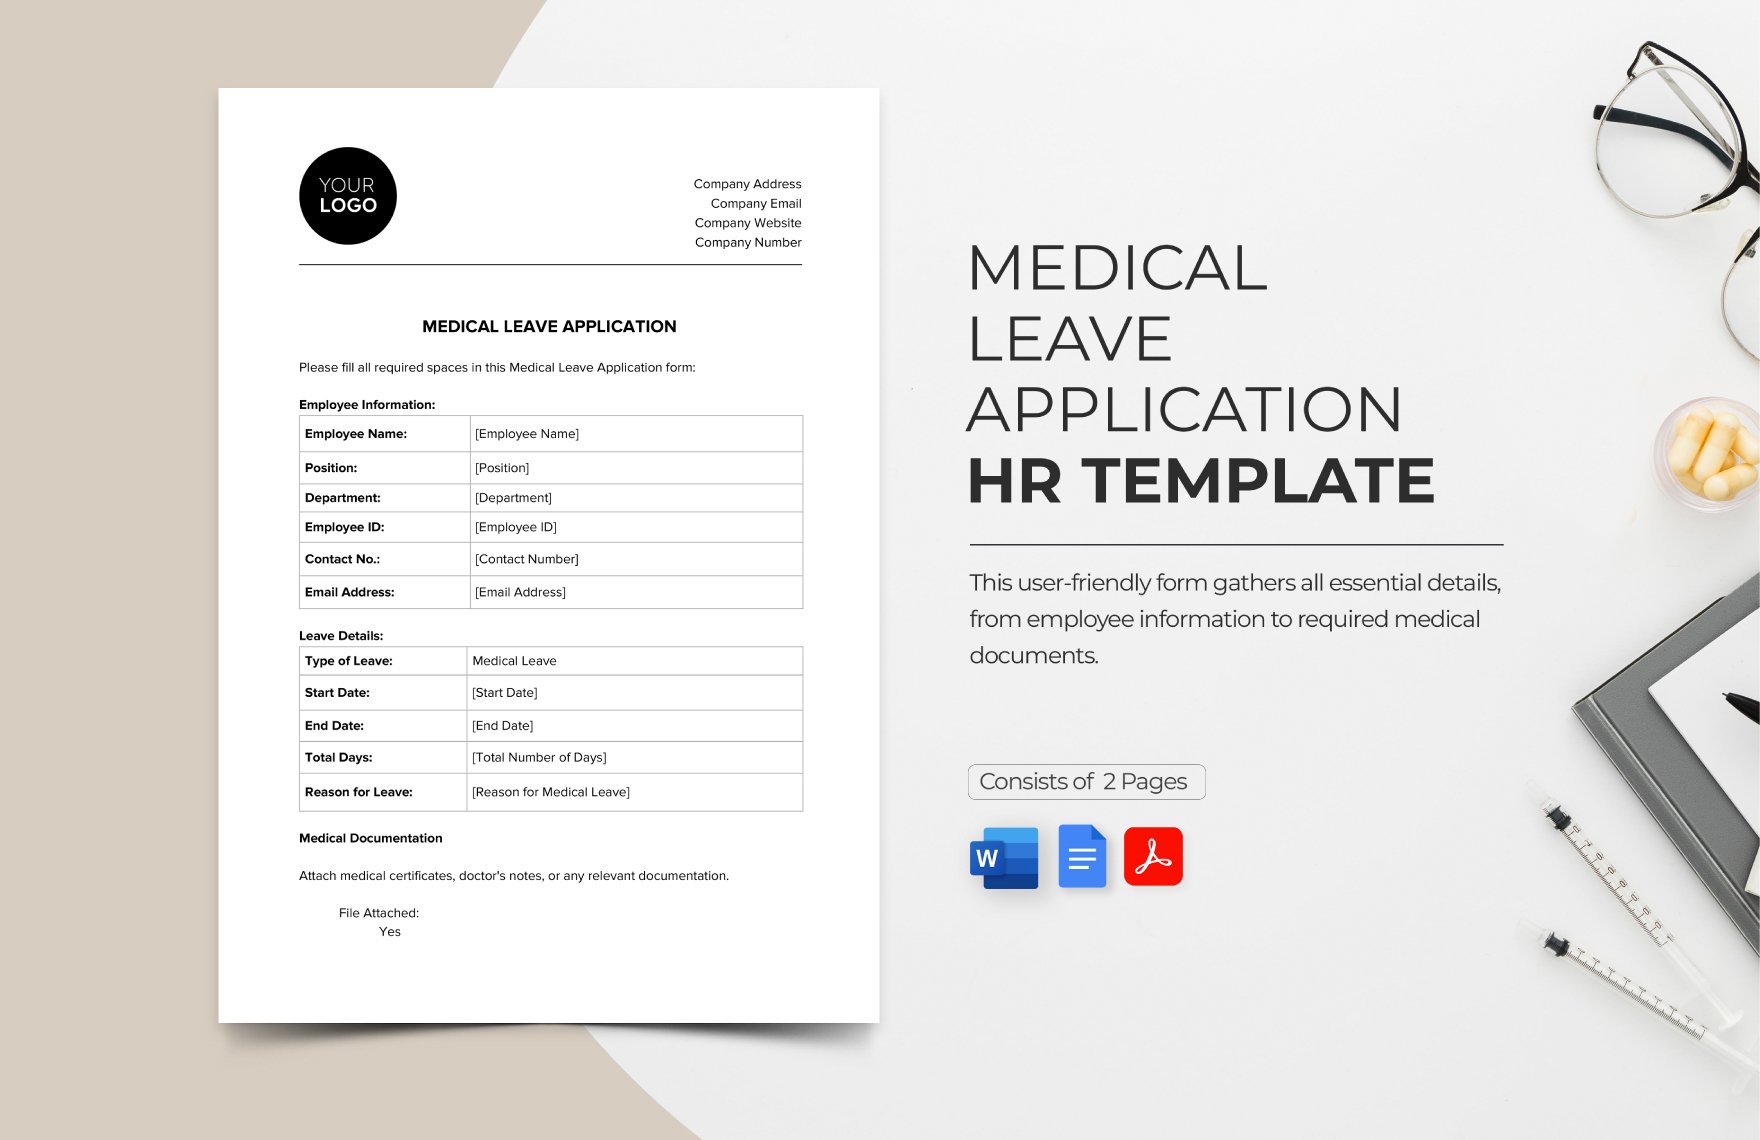 Medical Leave Application HR Template